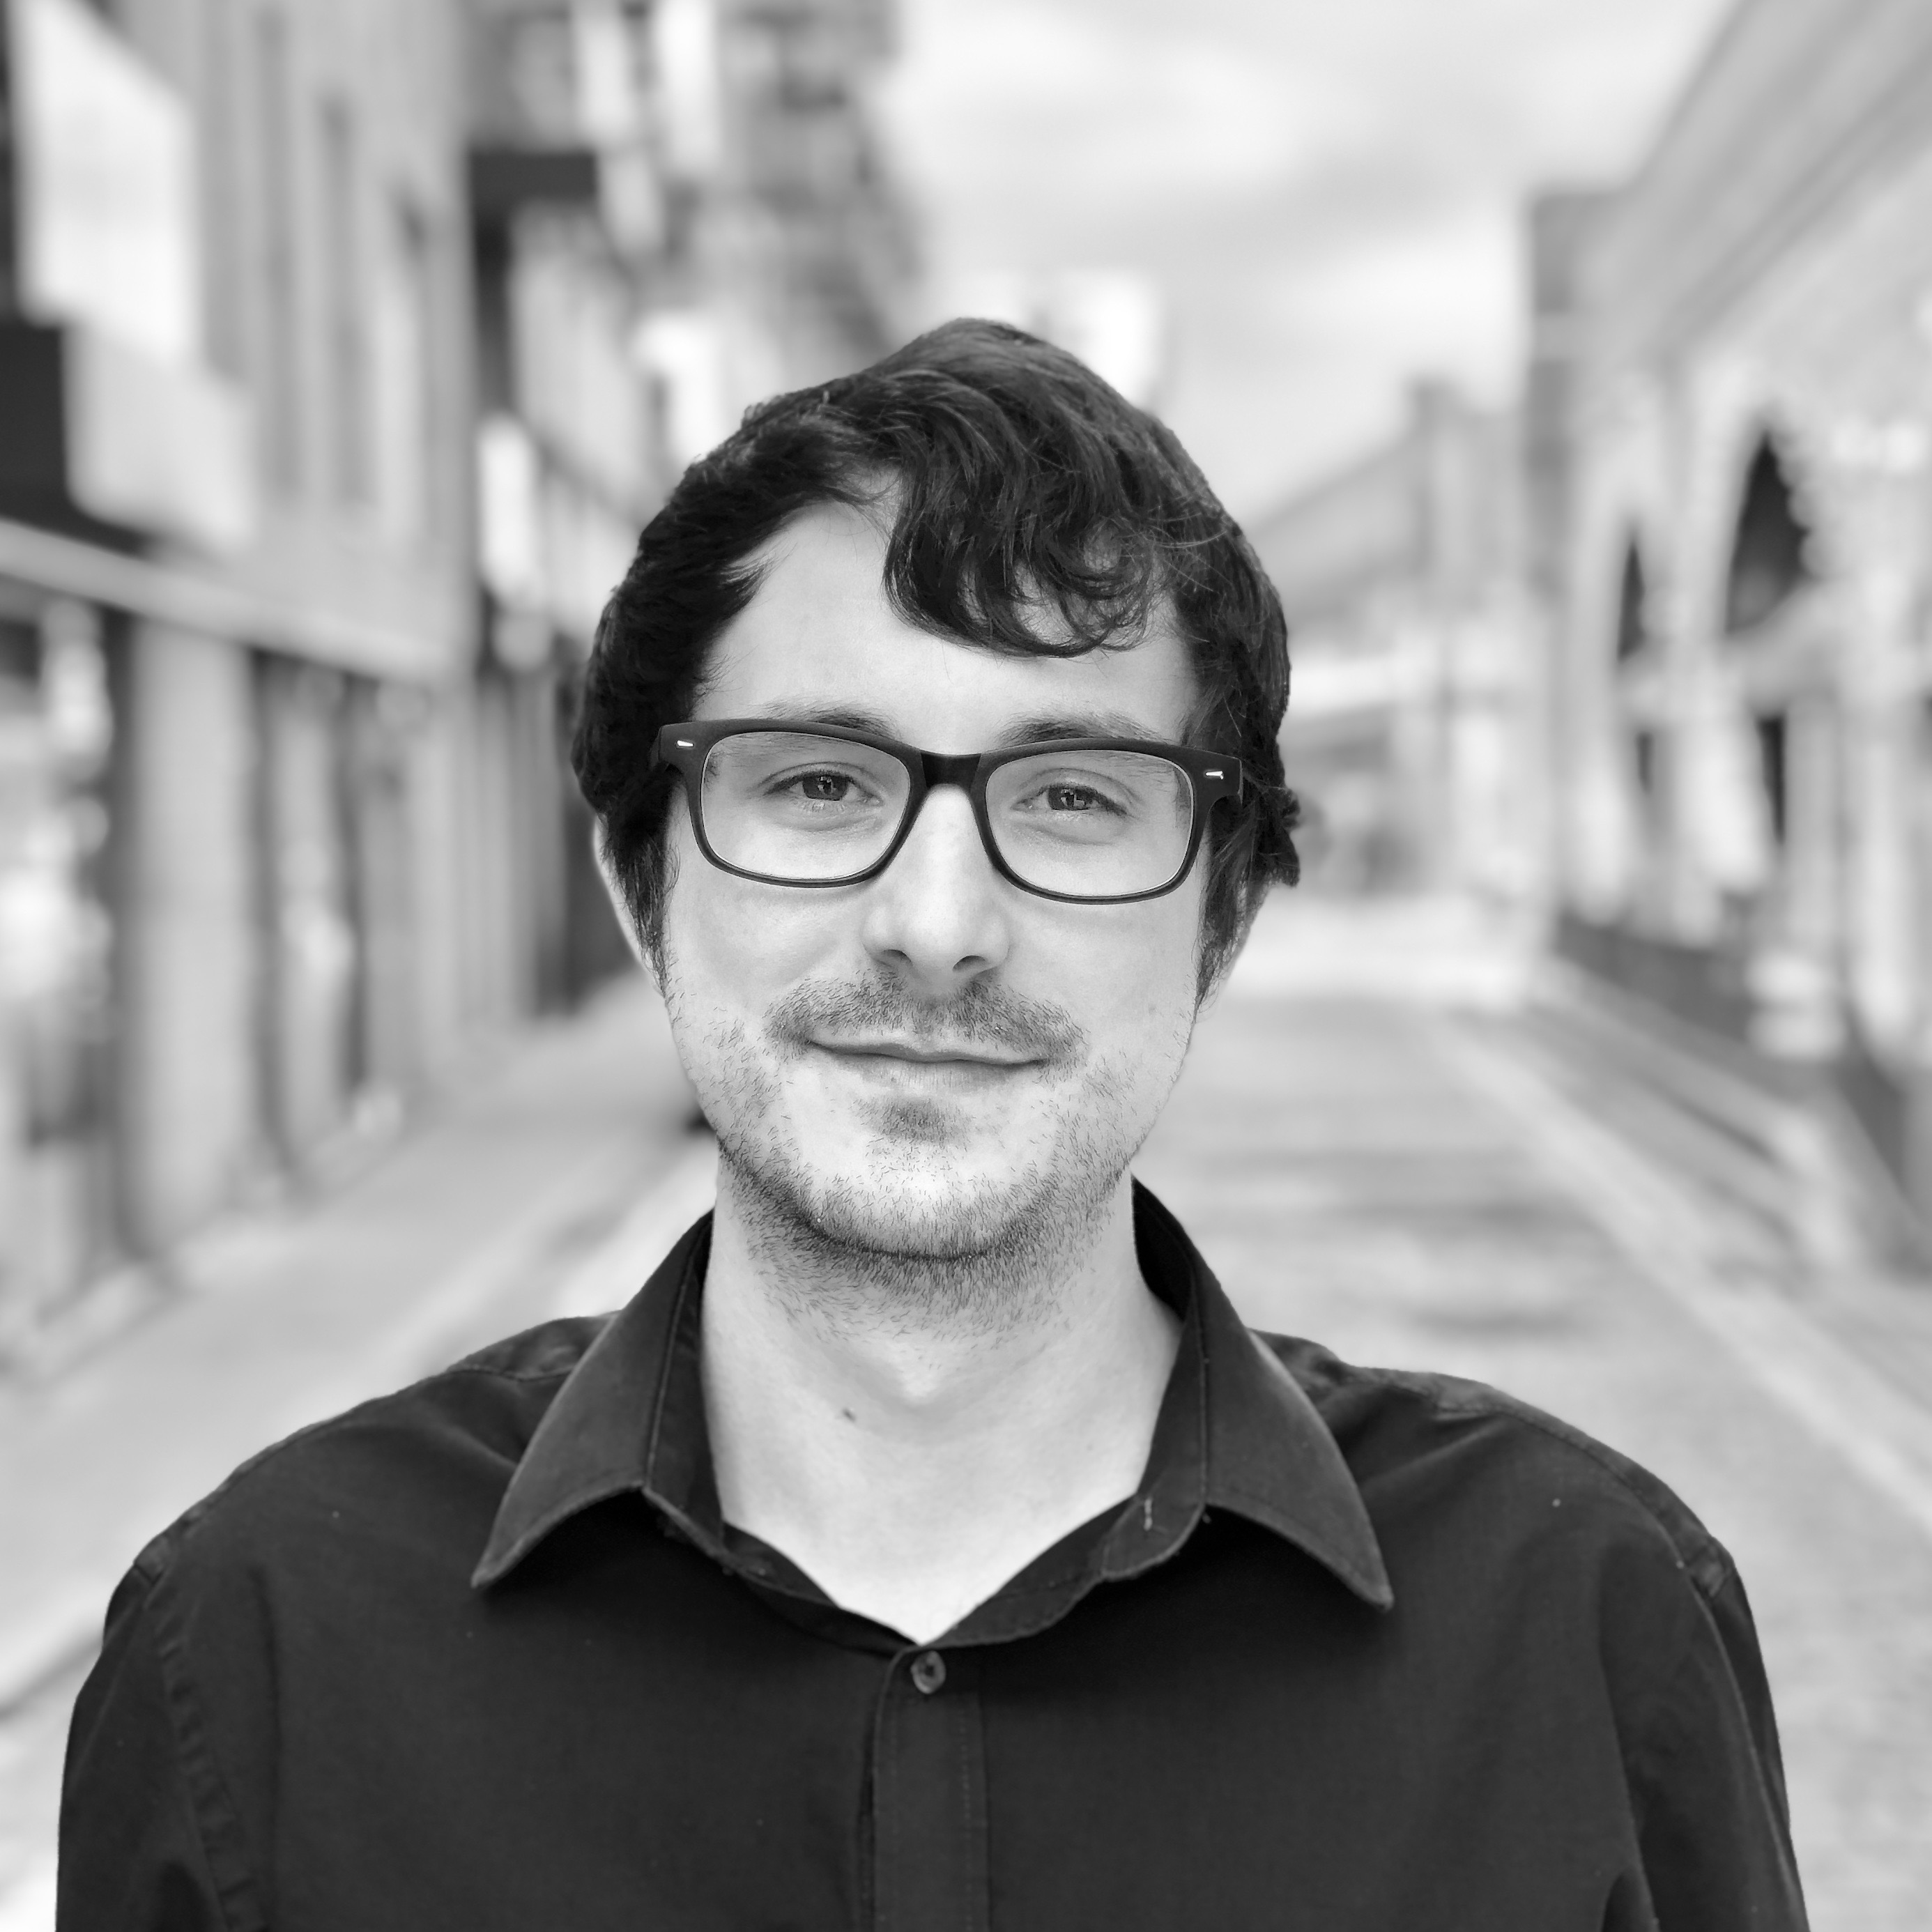 Portrait of Jesus Sanz, a Lead Software Engineer based in Madrid, Spain.